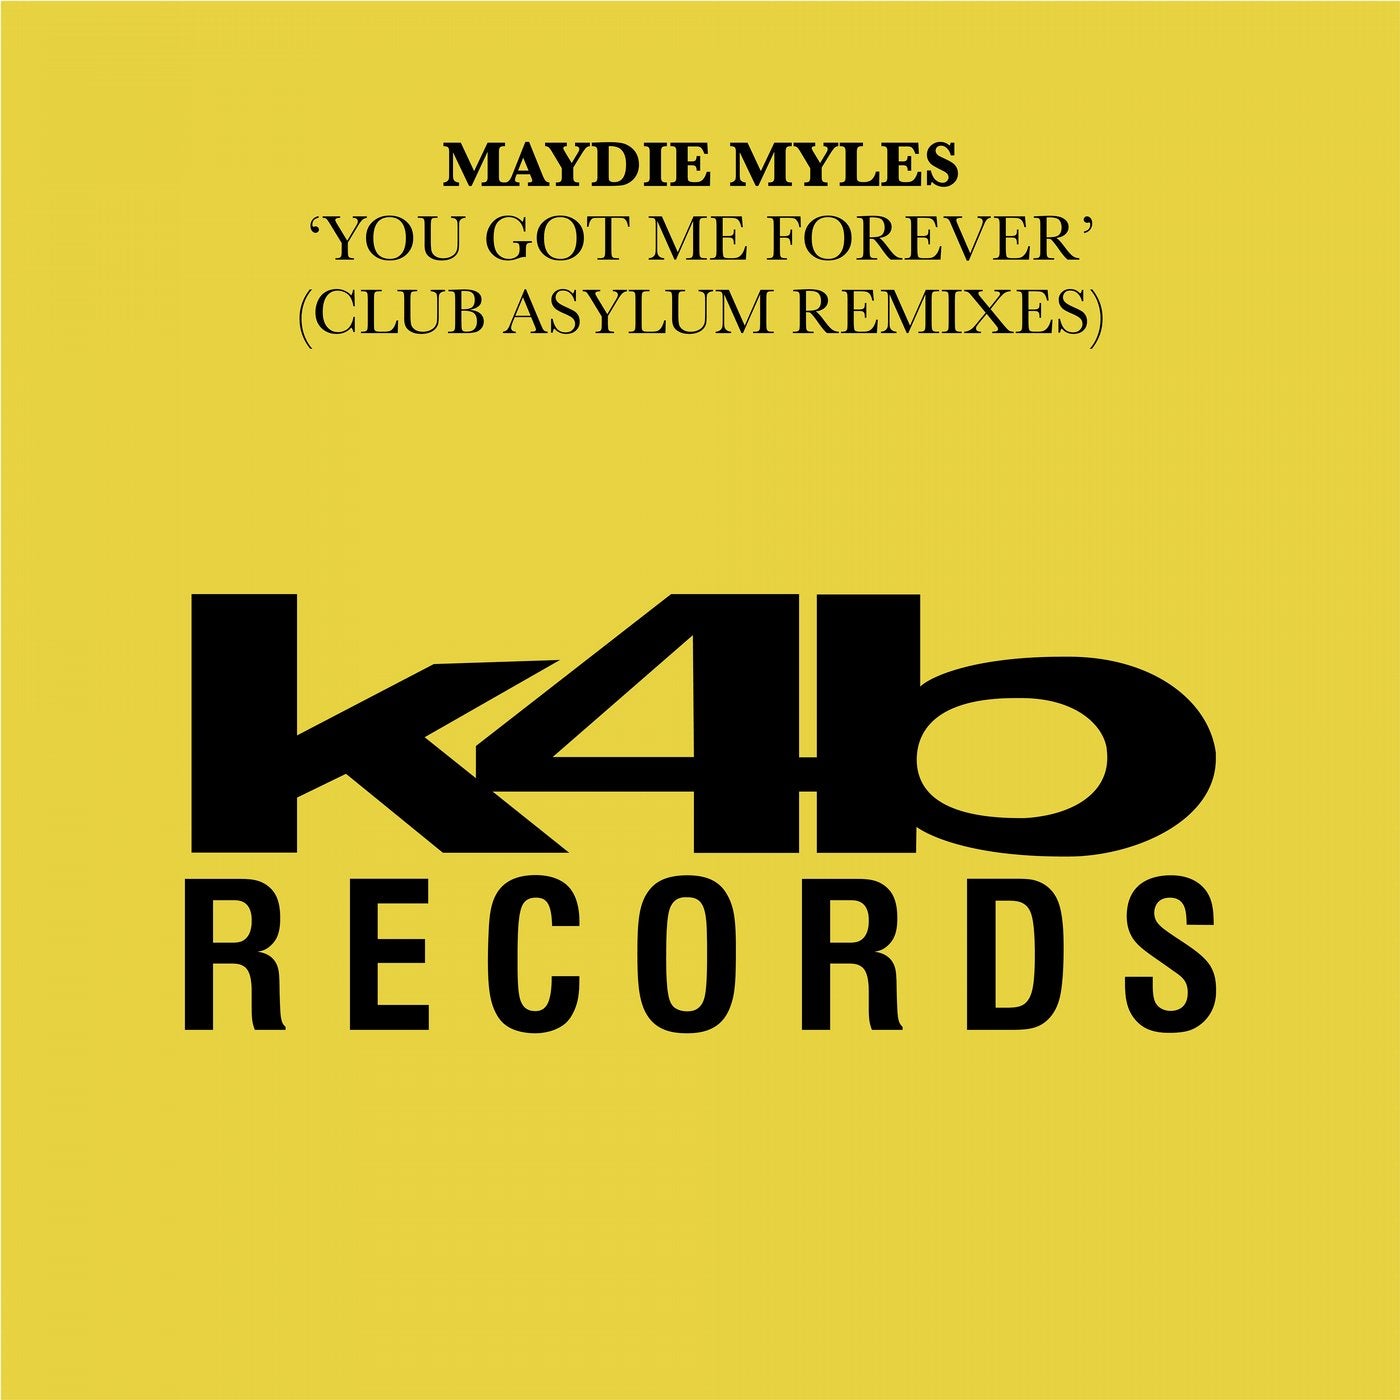 You Got Me Forever - Club Asylum Remixes